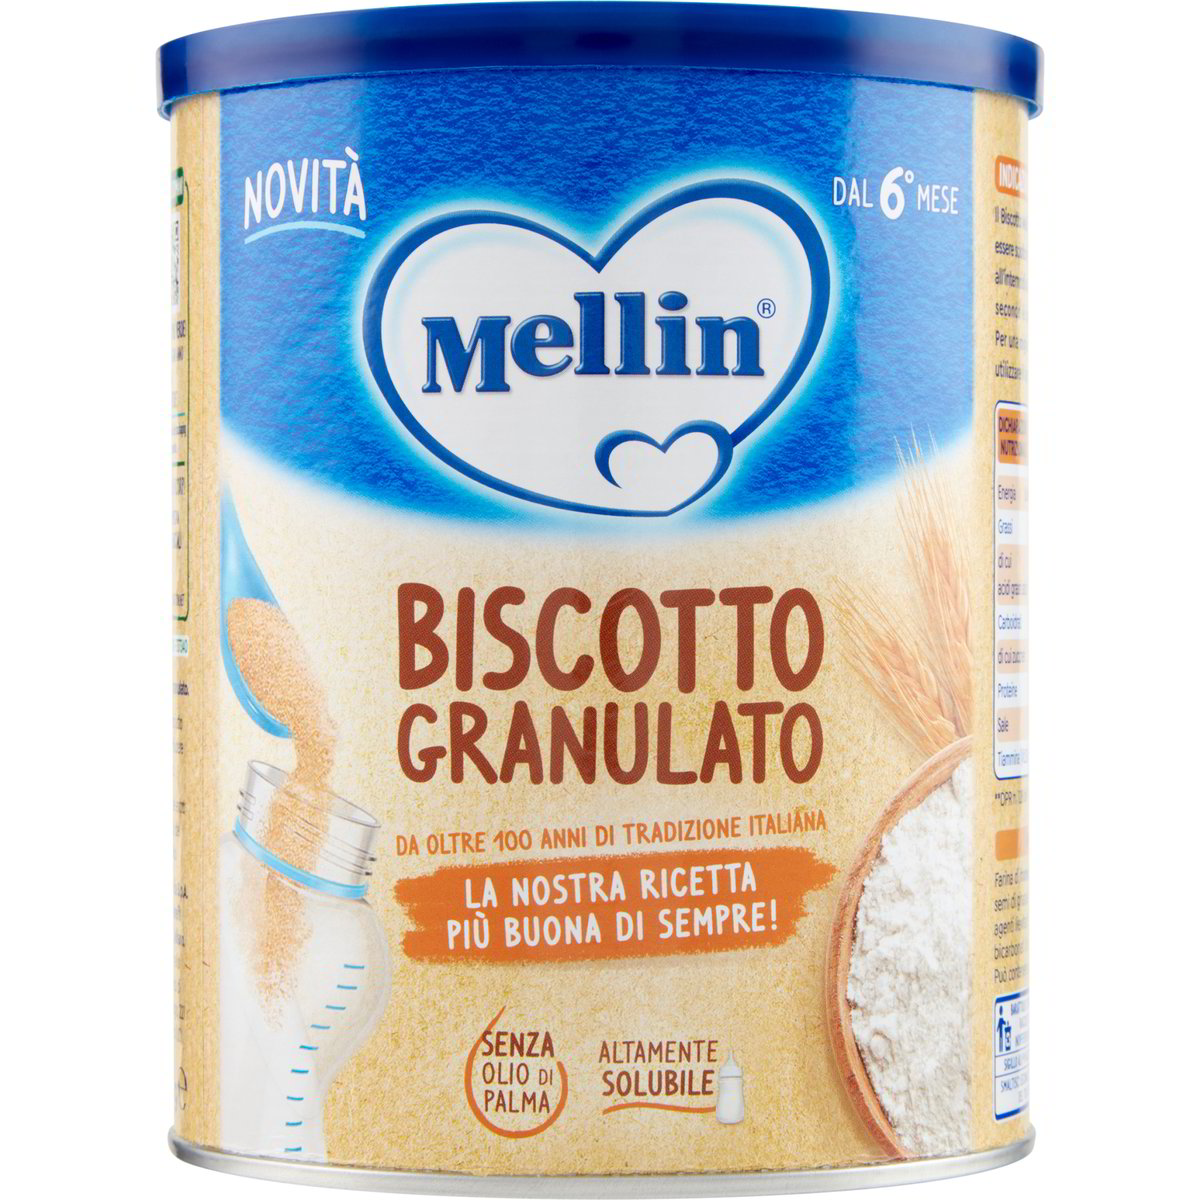 Biscotto granulato MELLIN 400 G - Coop Shop